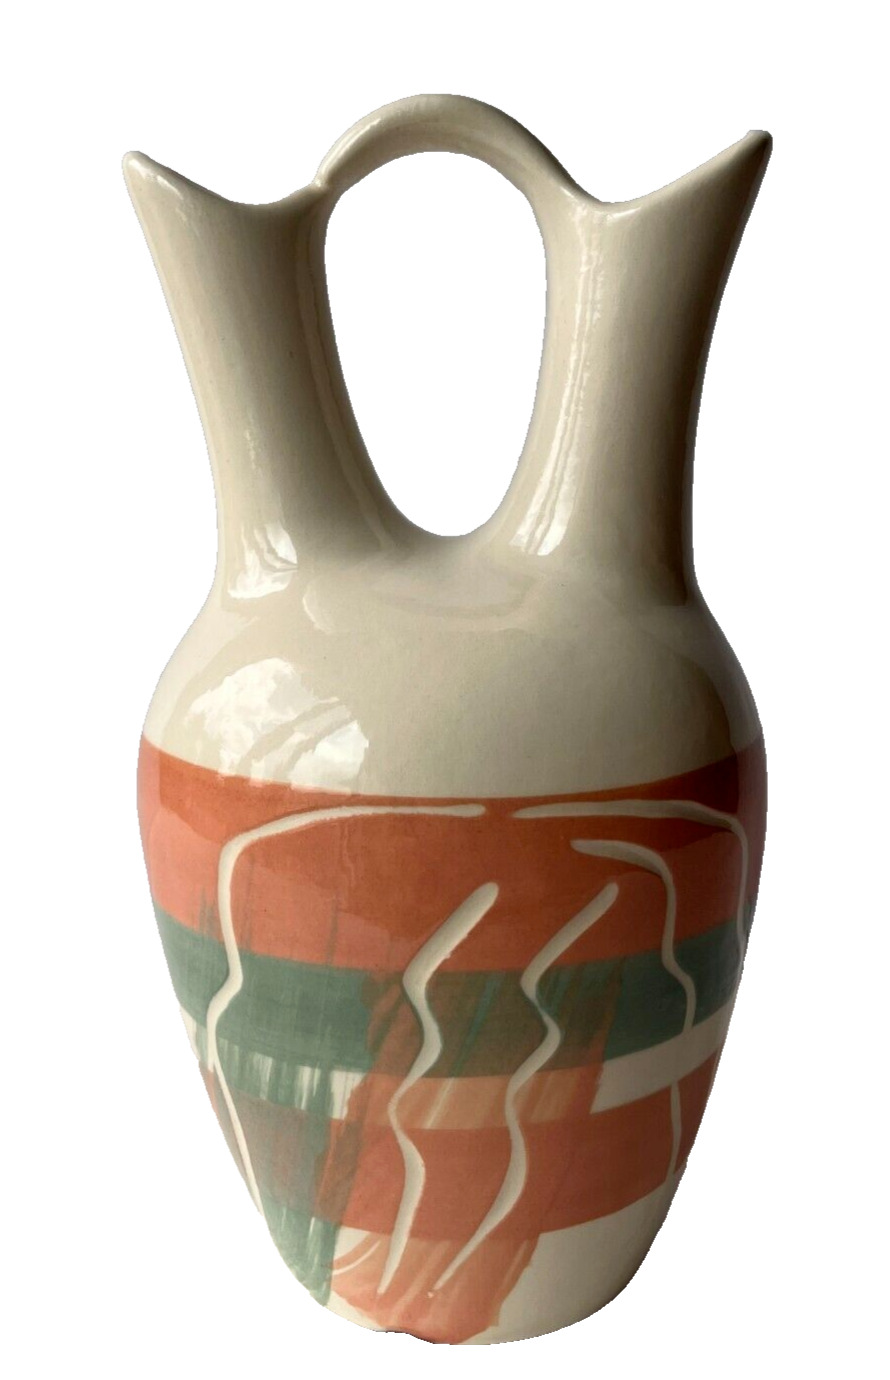 Vintage Southwestern Wedding Vase Ceramic Pitcher 9” H Made in USA, MCM Decor